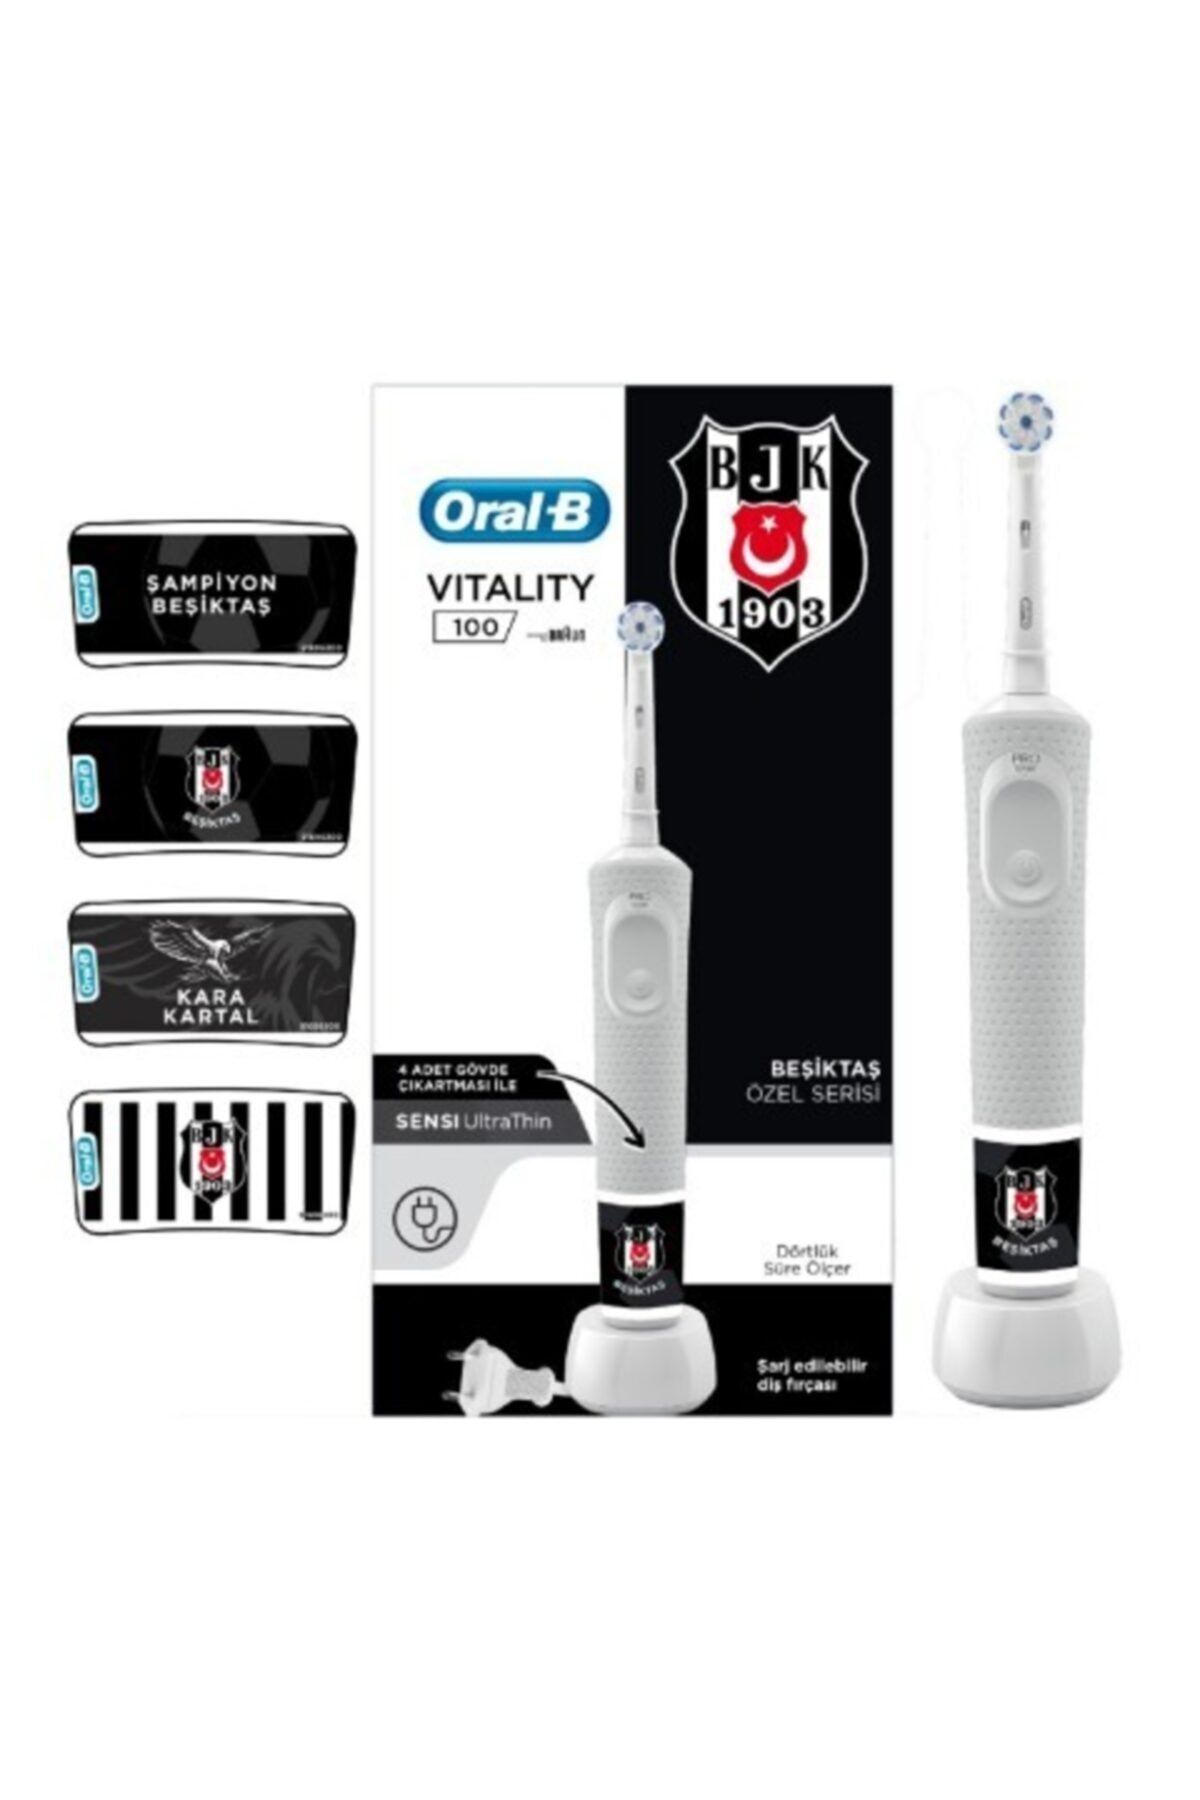 Oral-B Oral B Vitality D100 Şarjlı Elektirkli Diş Fırçası Beşiktaş Özel Seri